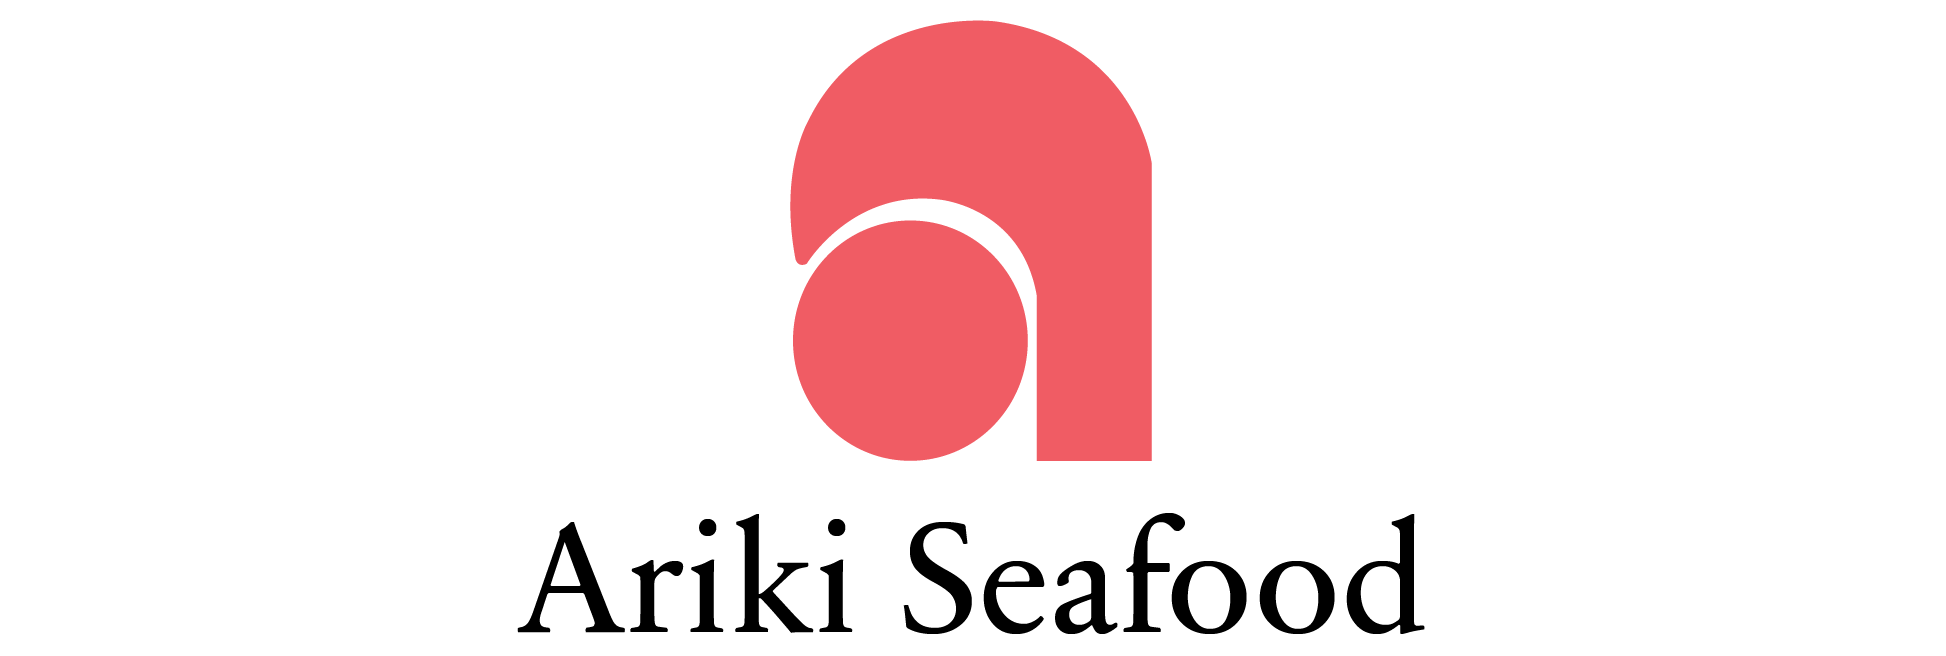 Ariki Seafood Logo